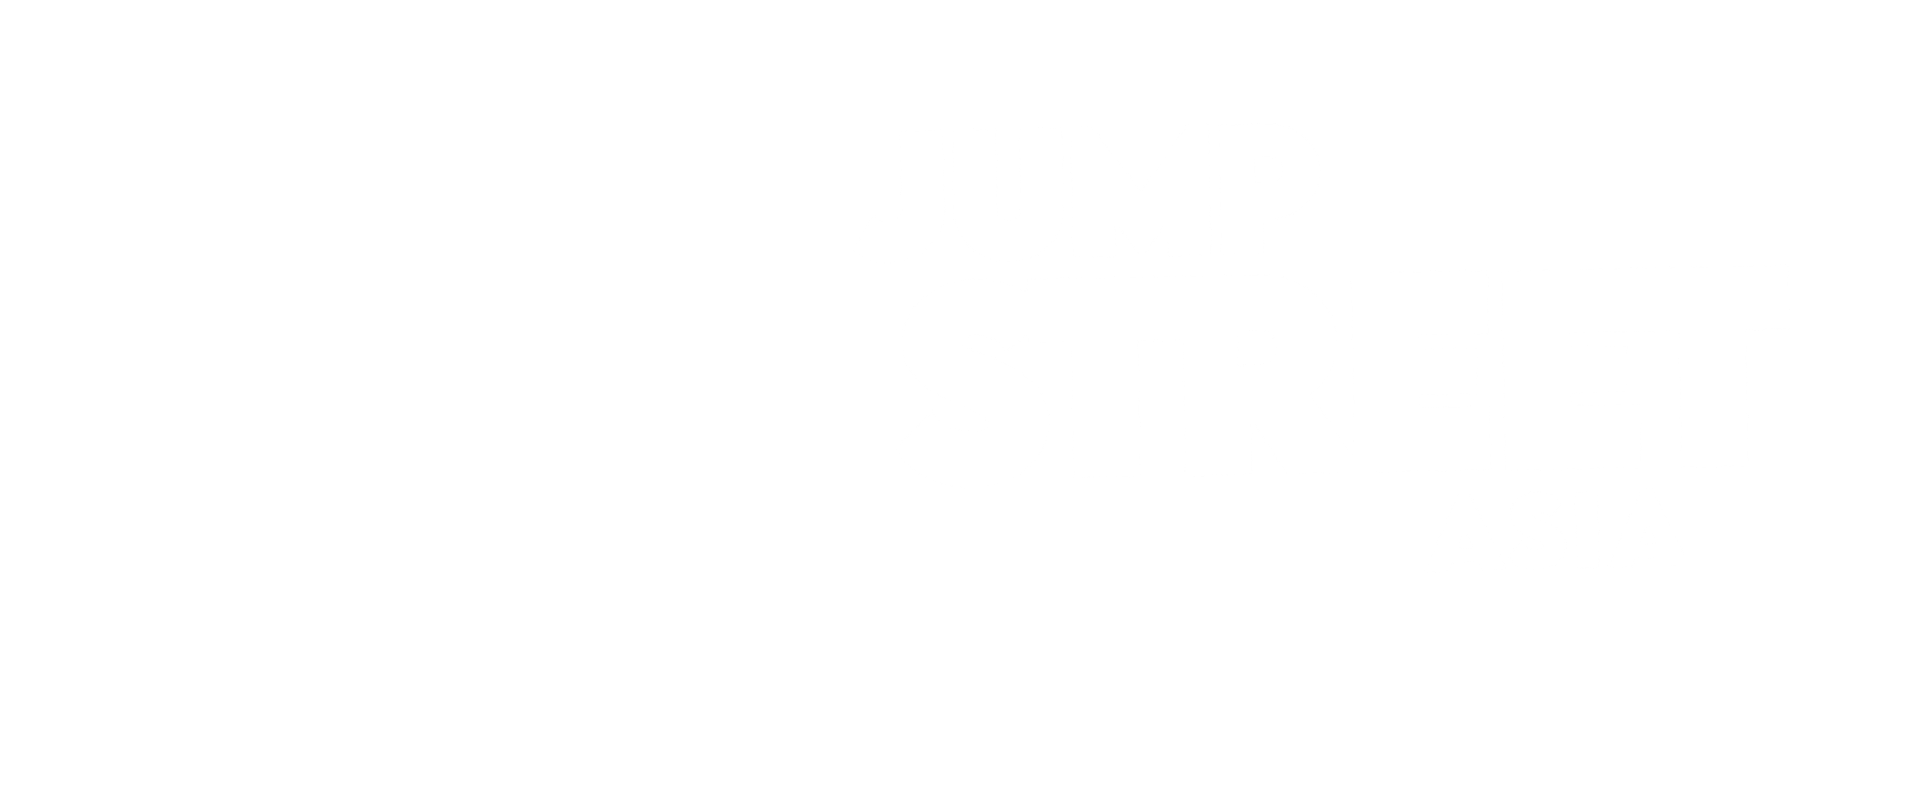 Jump Street Asia